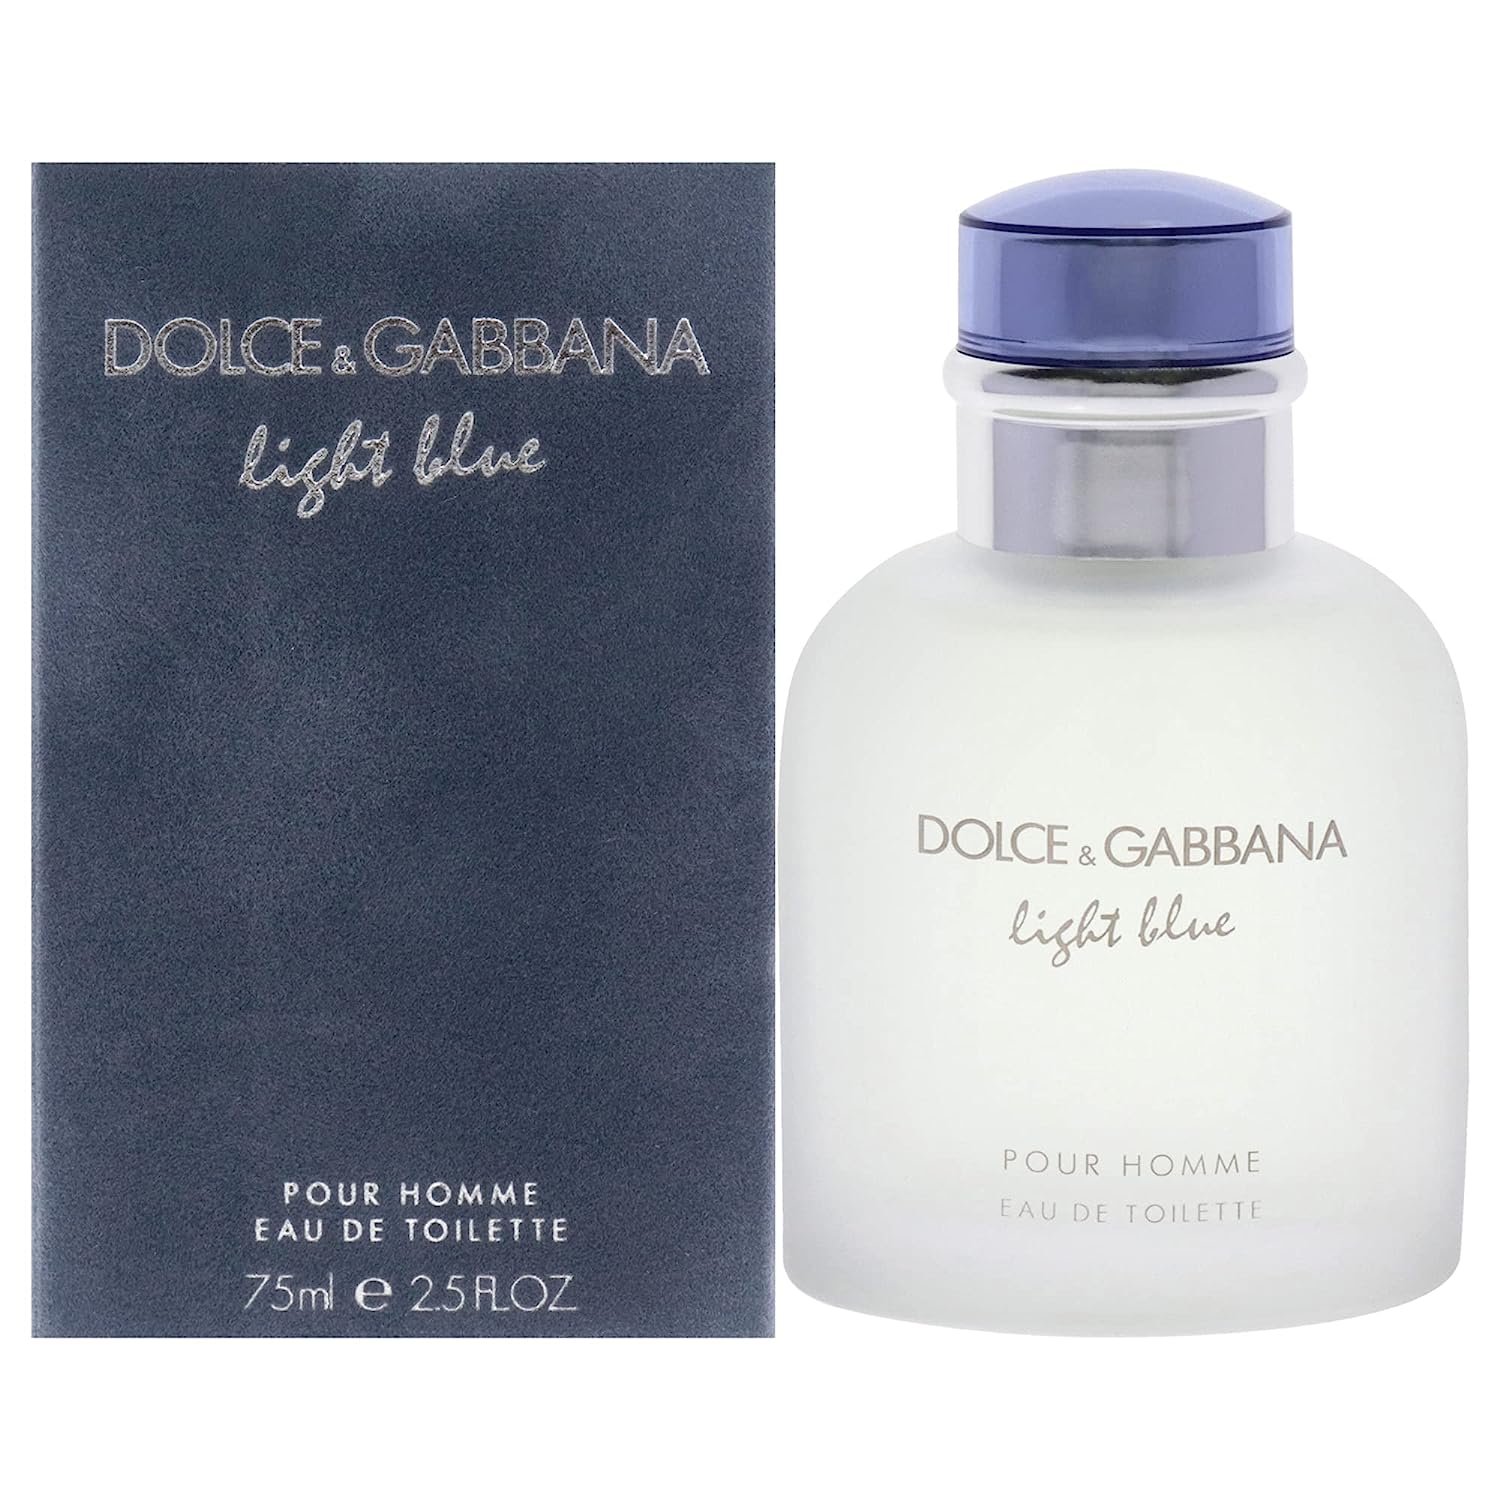 DOLCE AND GABBANA LIGHT BLUE 2.5FL OZ